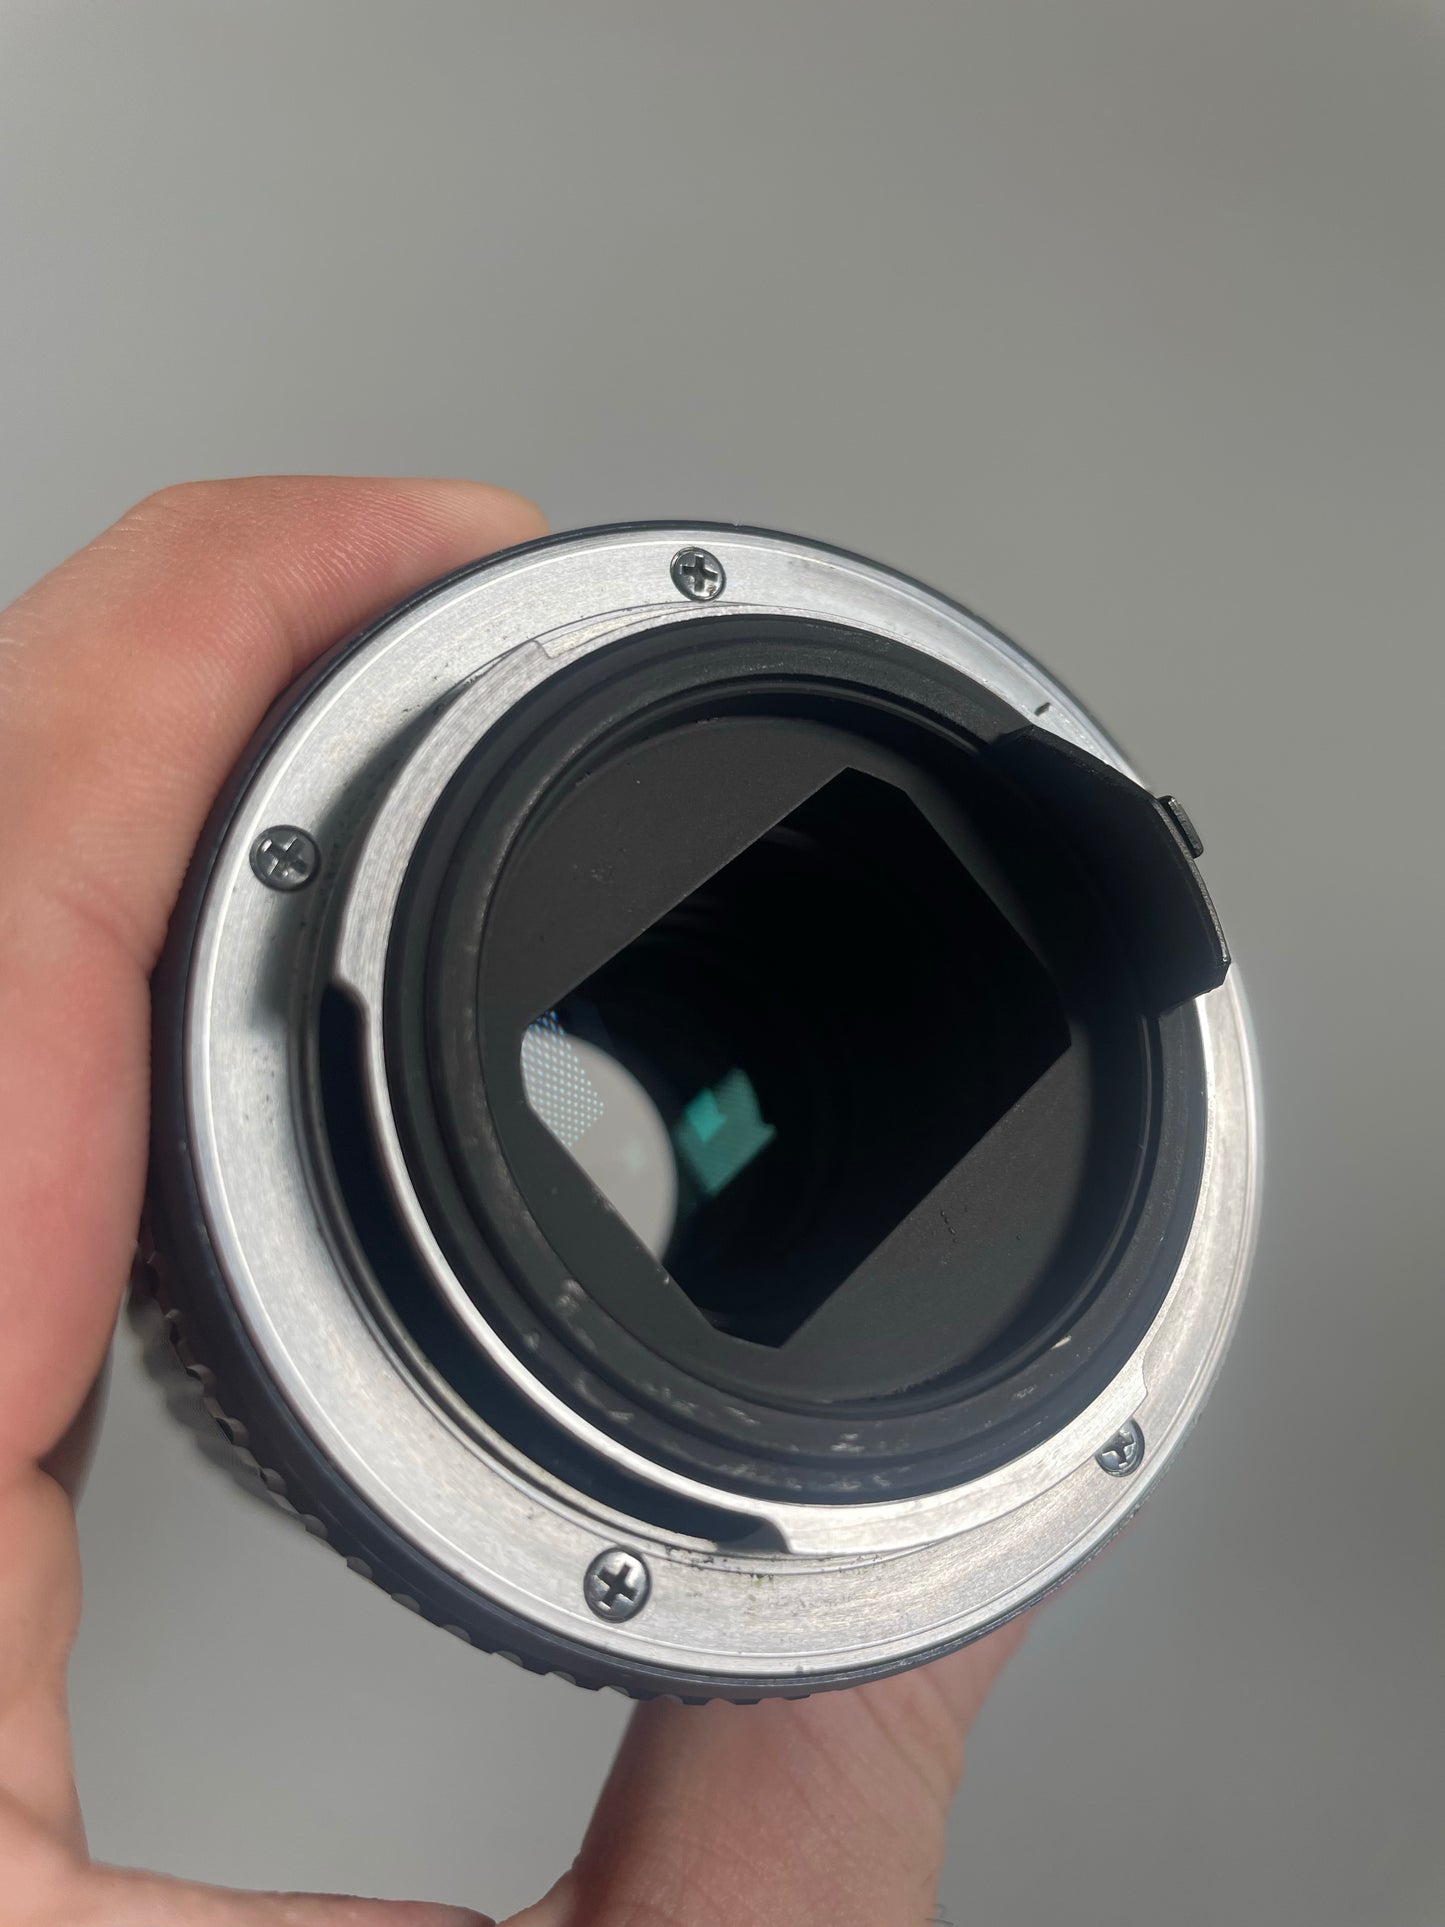 Asahi SMC Pentax 150mm F4 MF Lens K Mount RARE K version